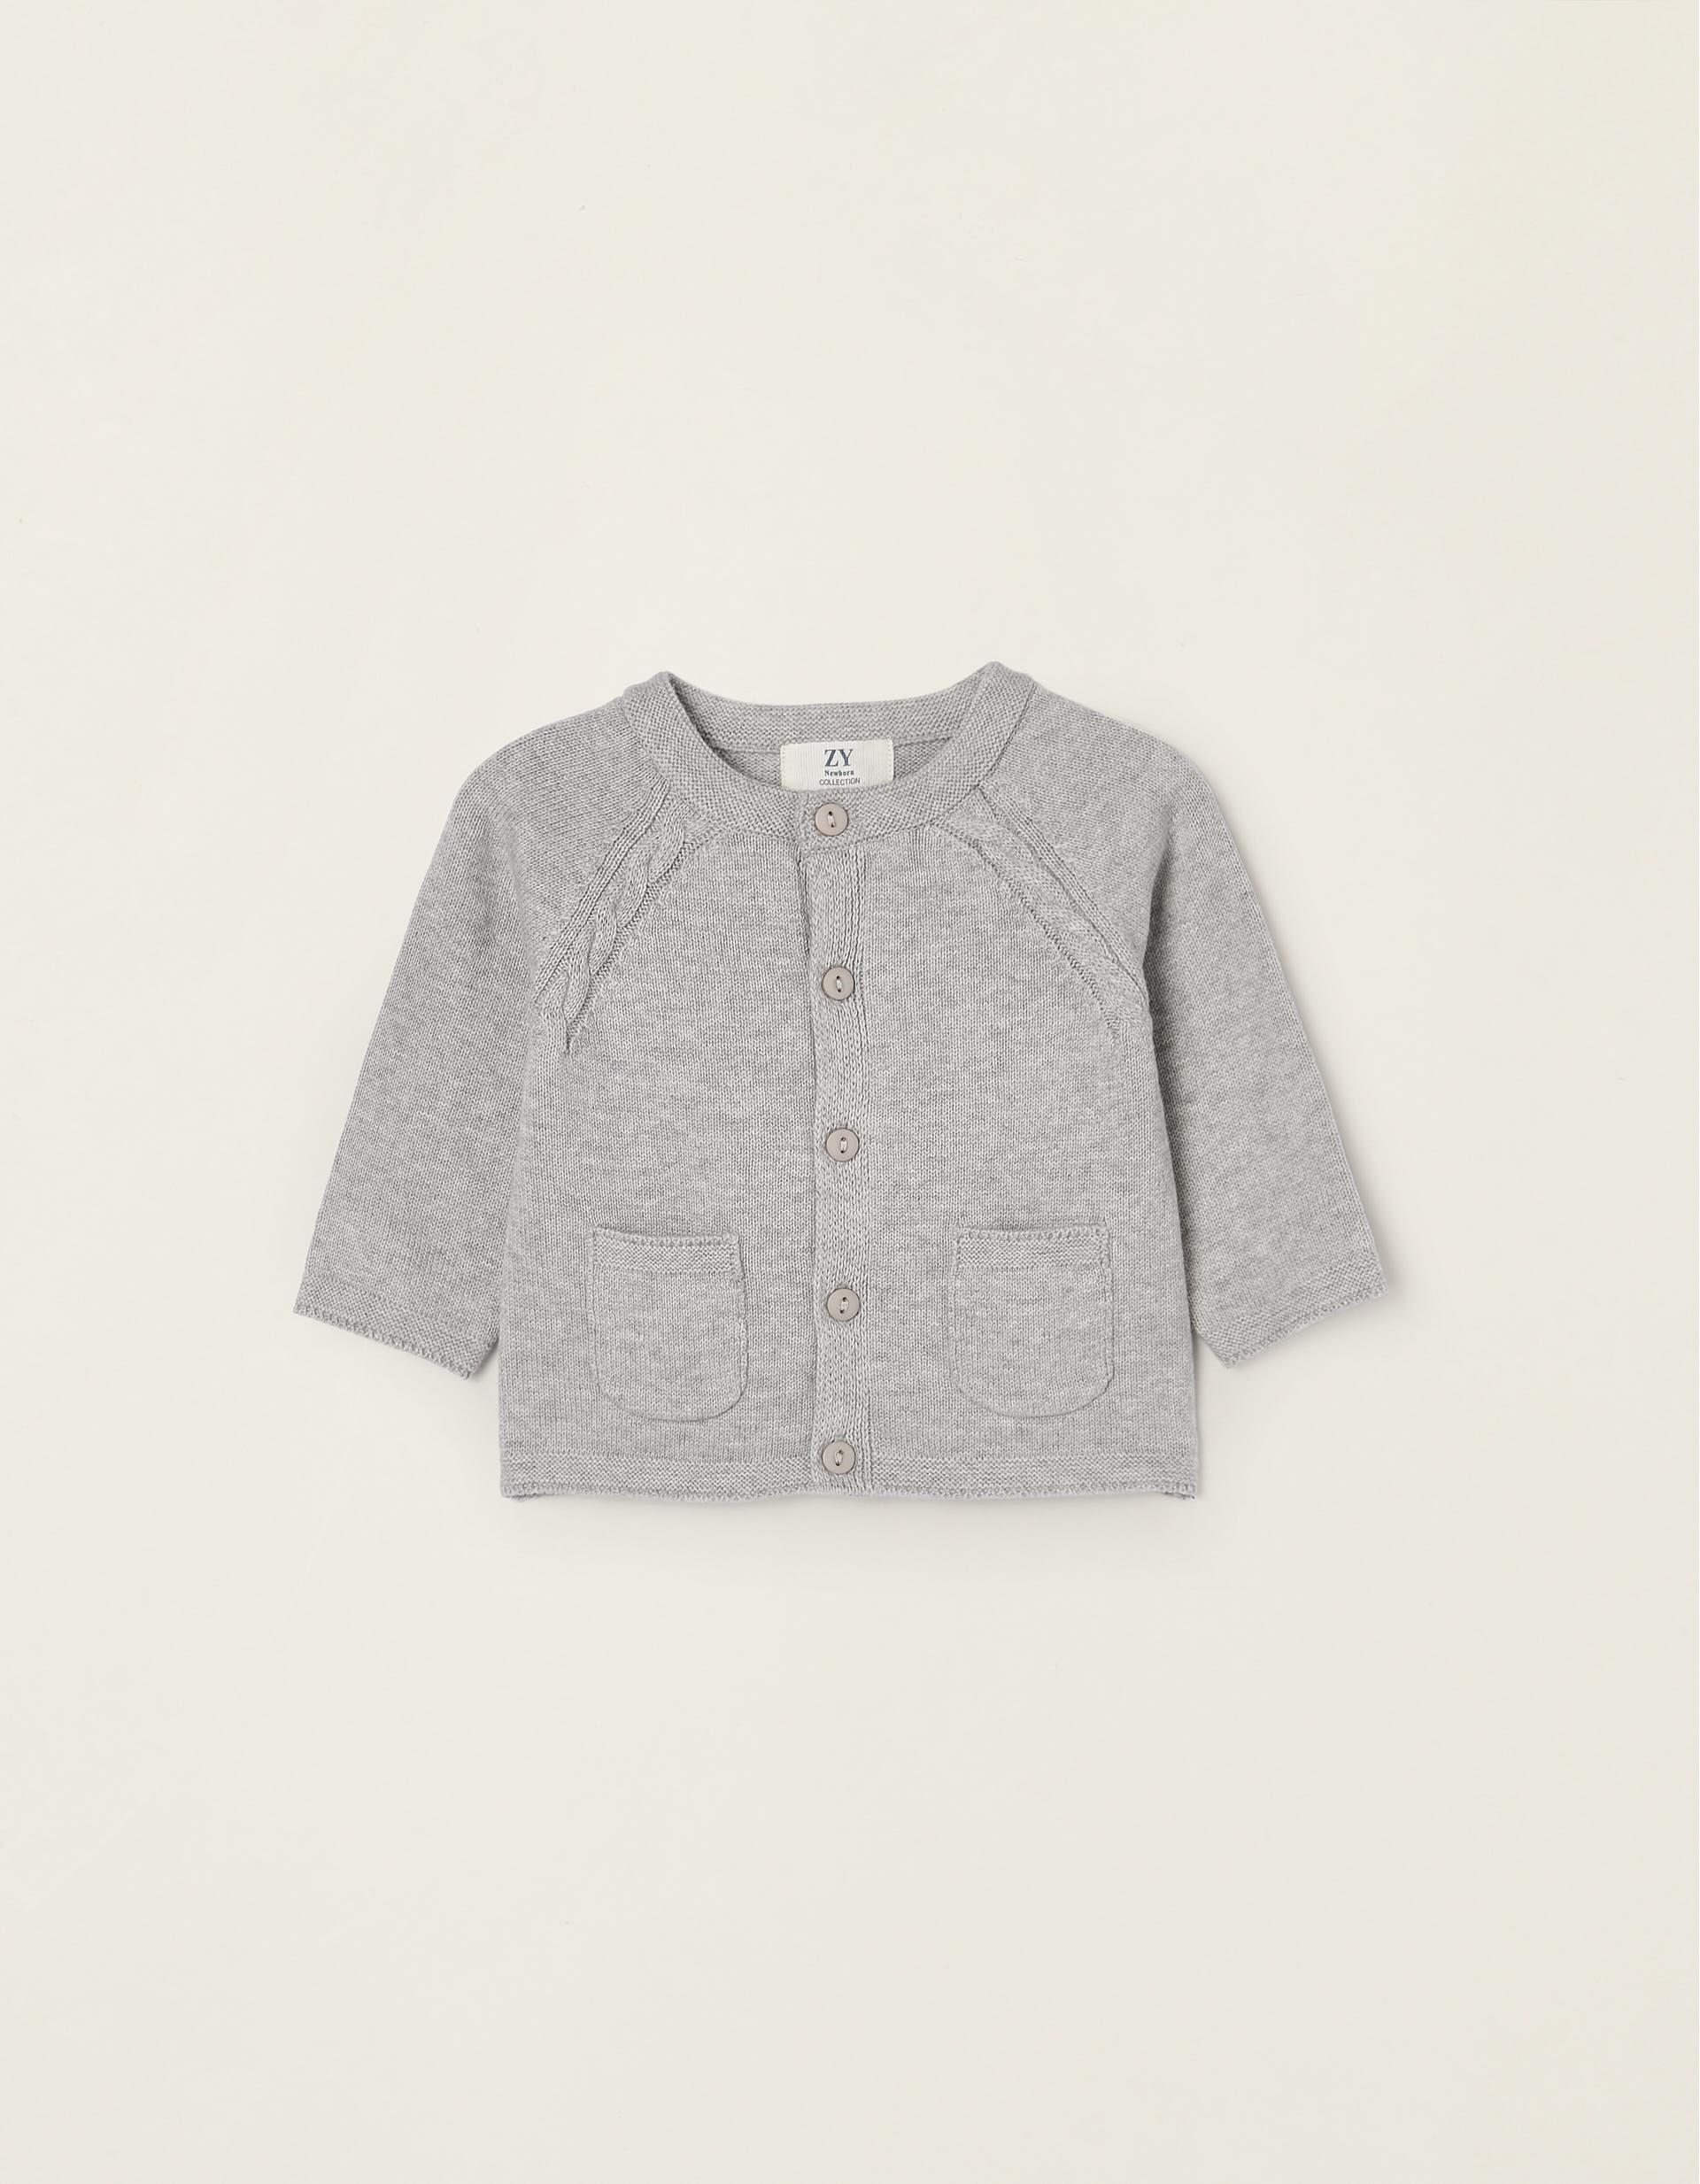 Zippy - Grey Cotton Cardigan, Baby Unisex